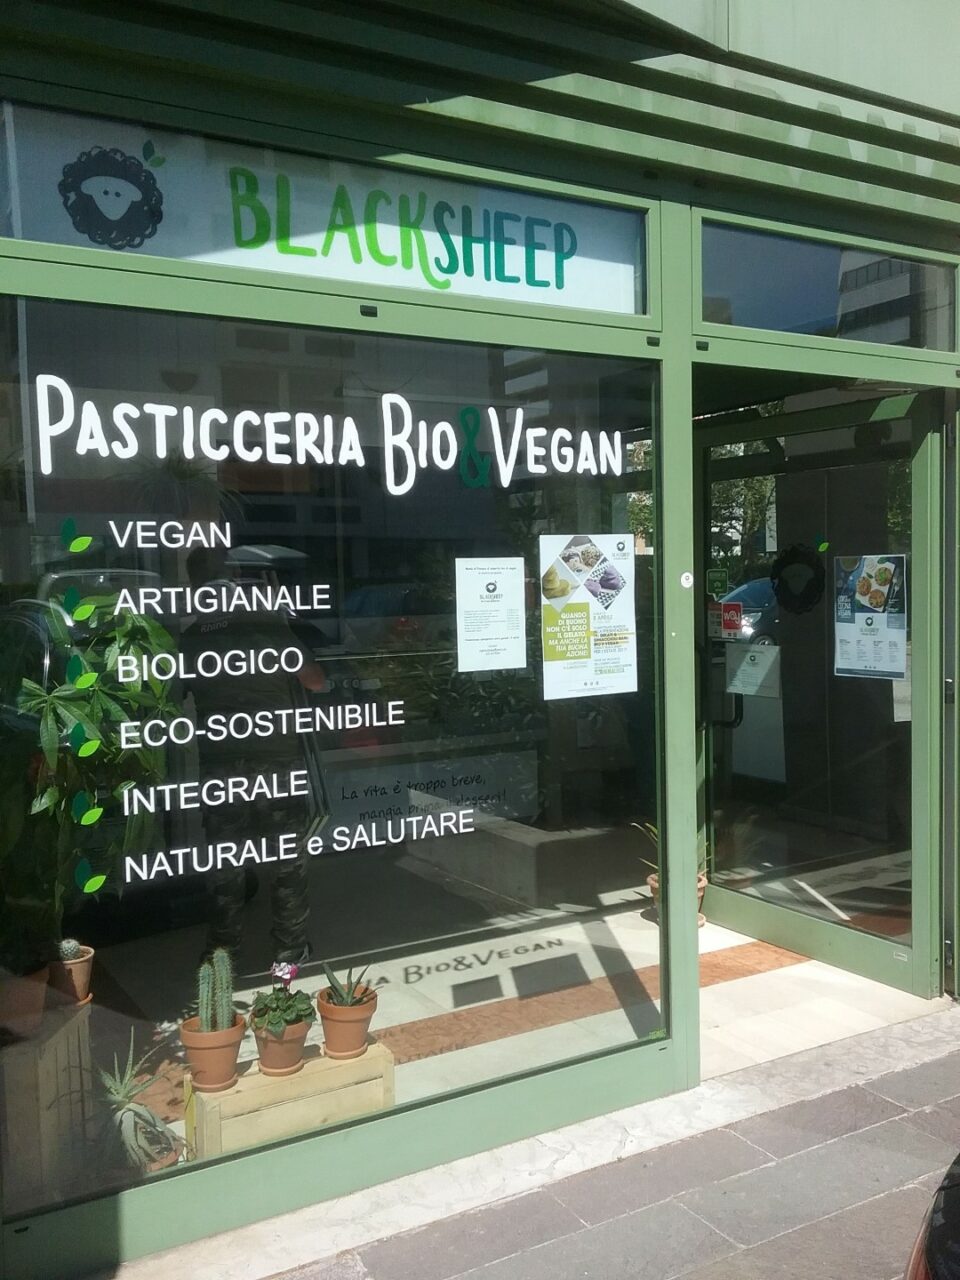 Eticanimalista c/o Black Sheep pasticceria bio vegan - gelati veg 2017 e informazione vegan - 08.04.2017 35